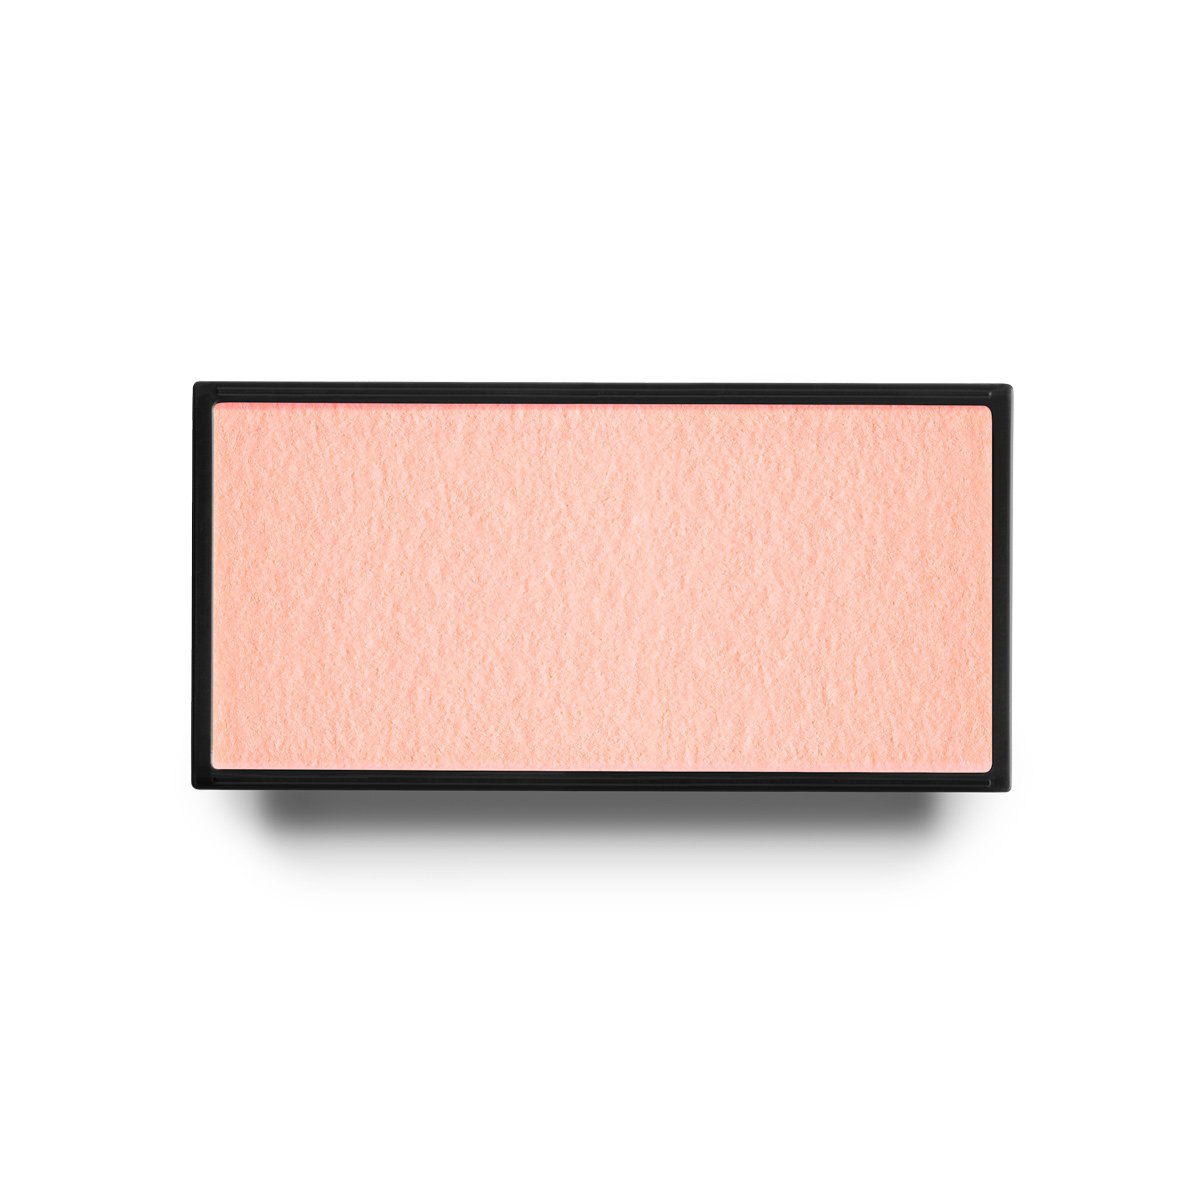 DUCHESSE - MATTE SOFT PEACH - matte finish powder blush in soft peach shade